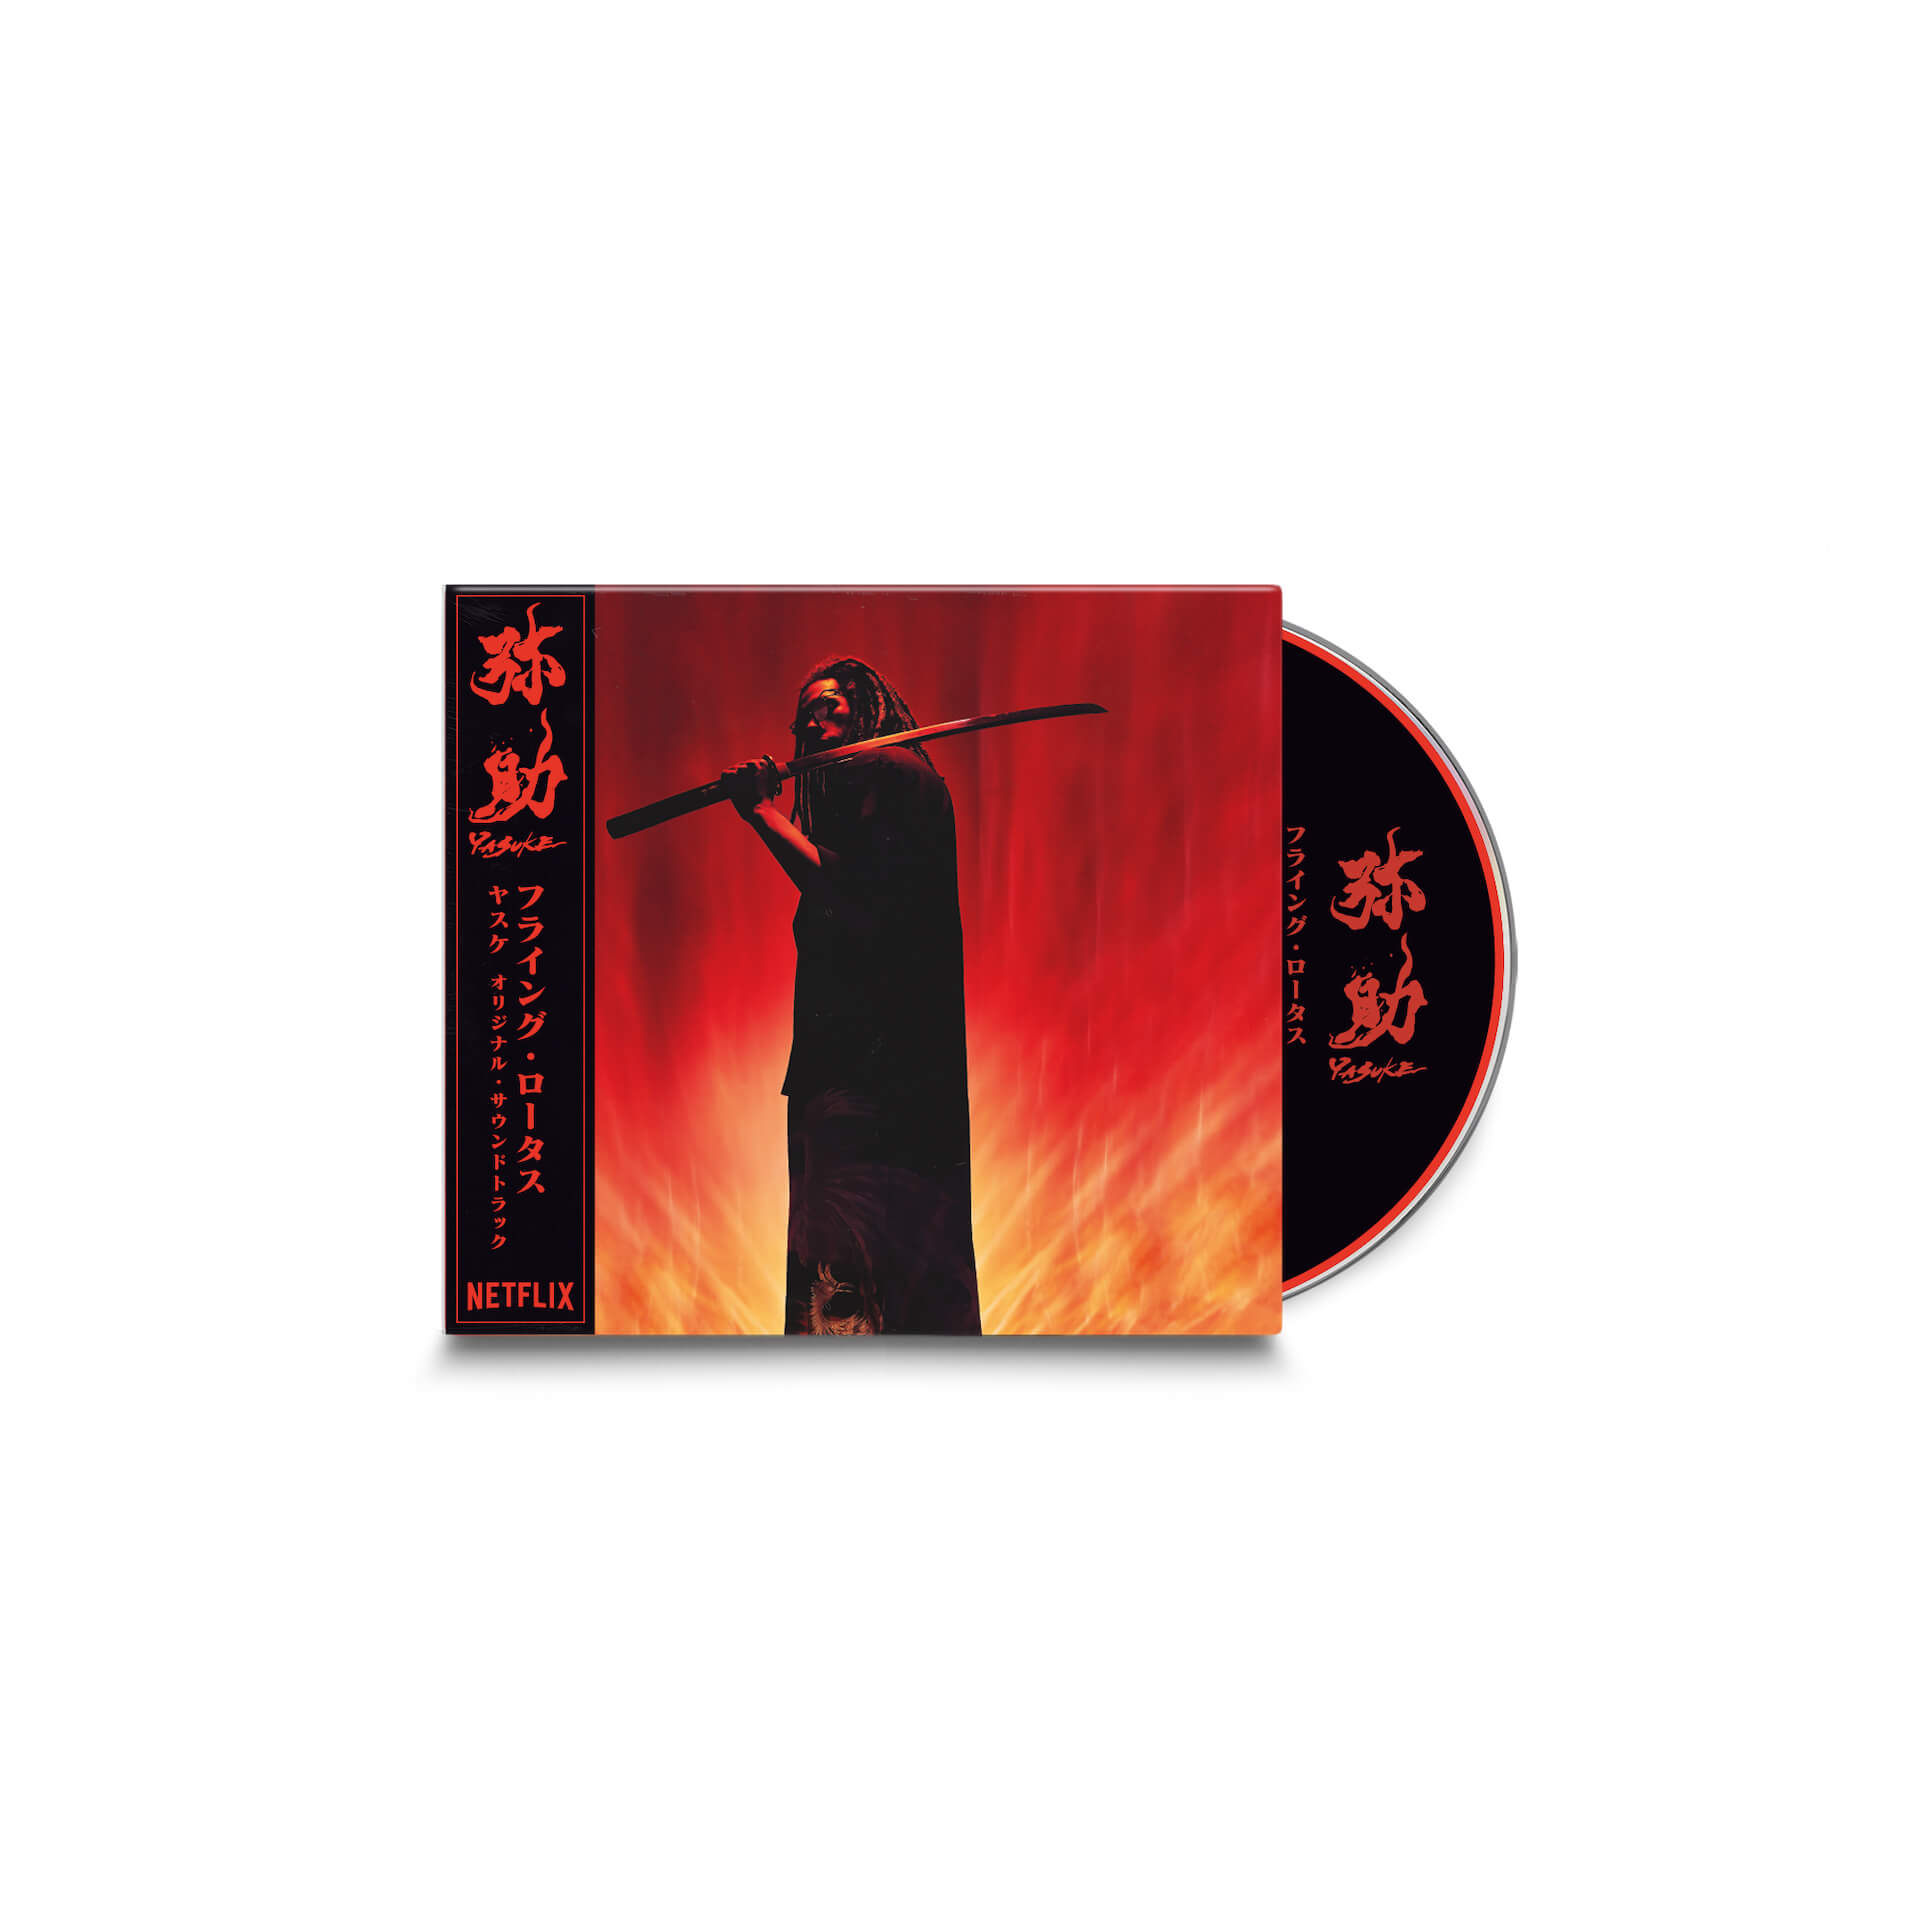 『YASUKE -ヤスケ-』の音楽を手がけたFlying Lotus最新作『YASUKE』が明日CDリリース！超高音質試聴イベントも実施 music210617_flyinglotus_yasuke_3